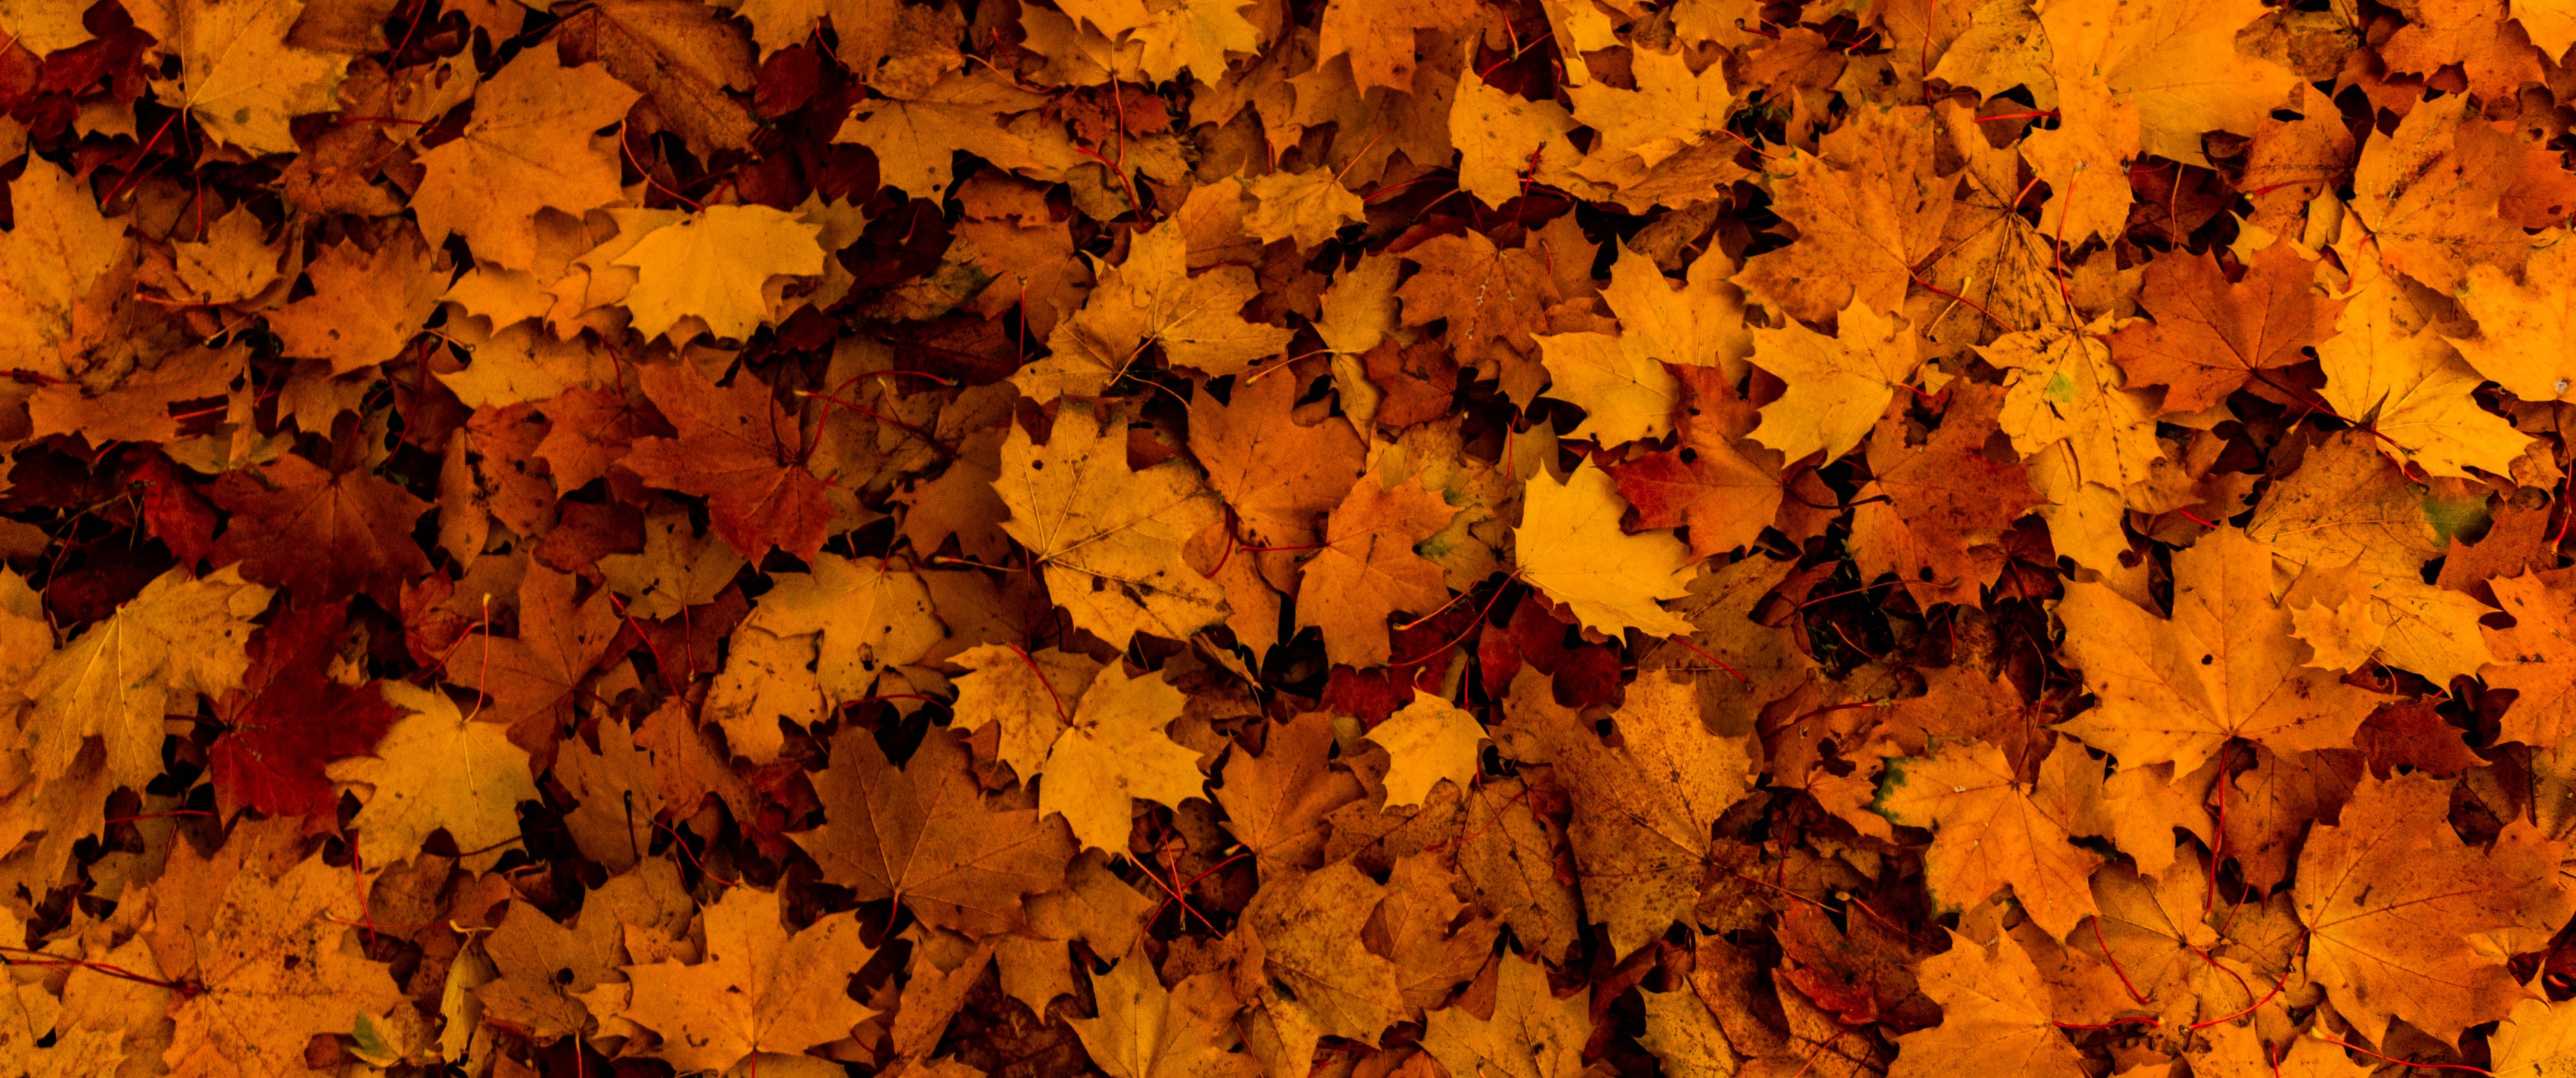 Fallen Leaves Wallpaper 4K, Autumn, Maple leaves, Texture, Foliage, Seasons, Nature